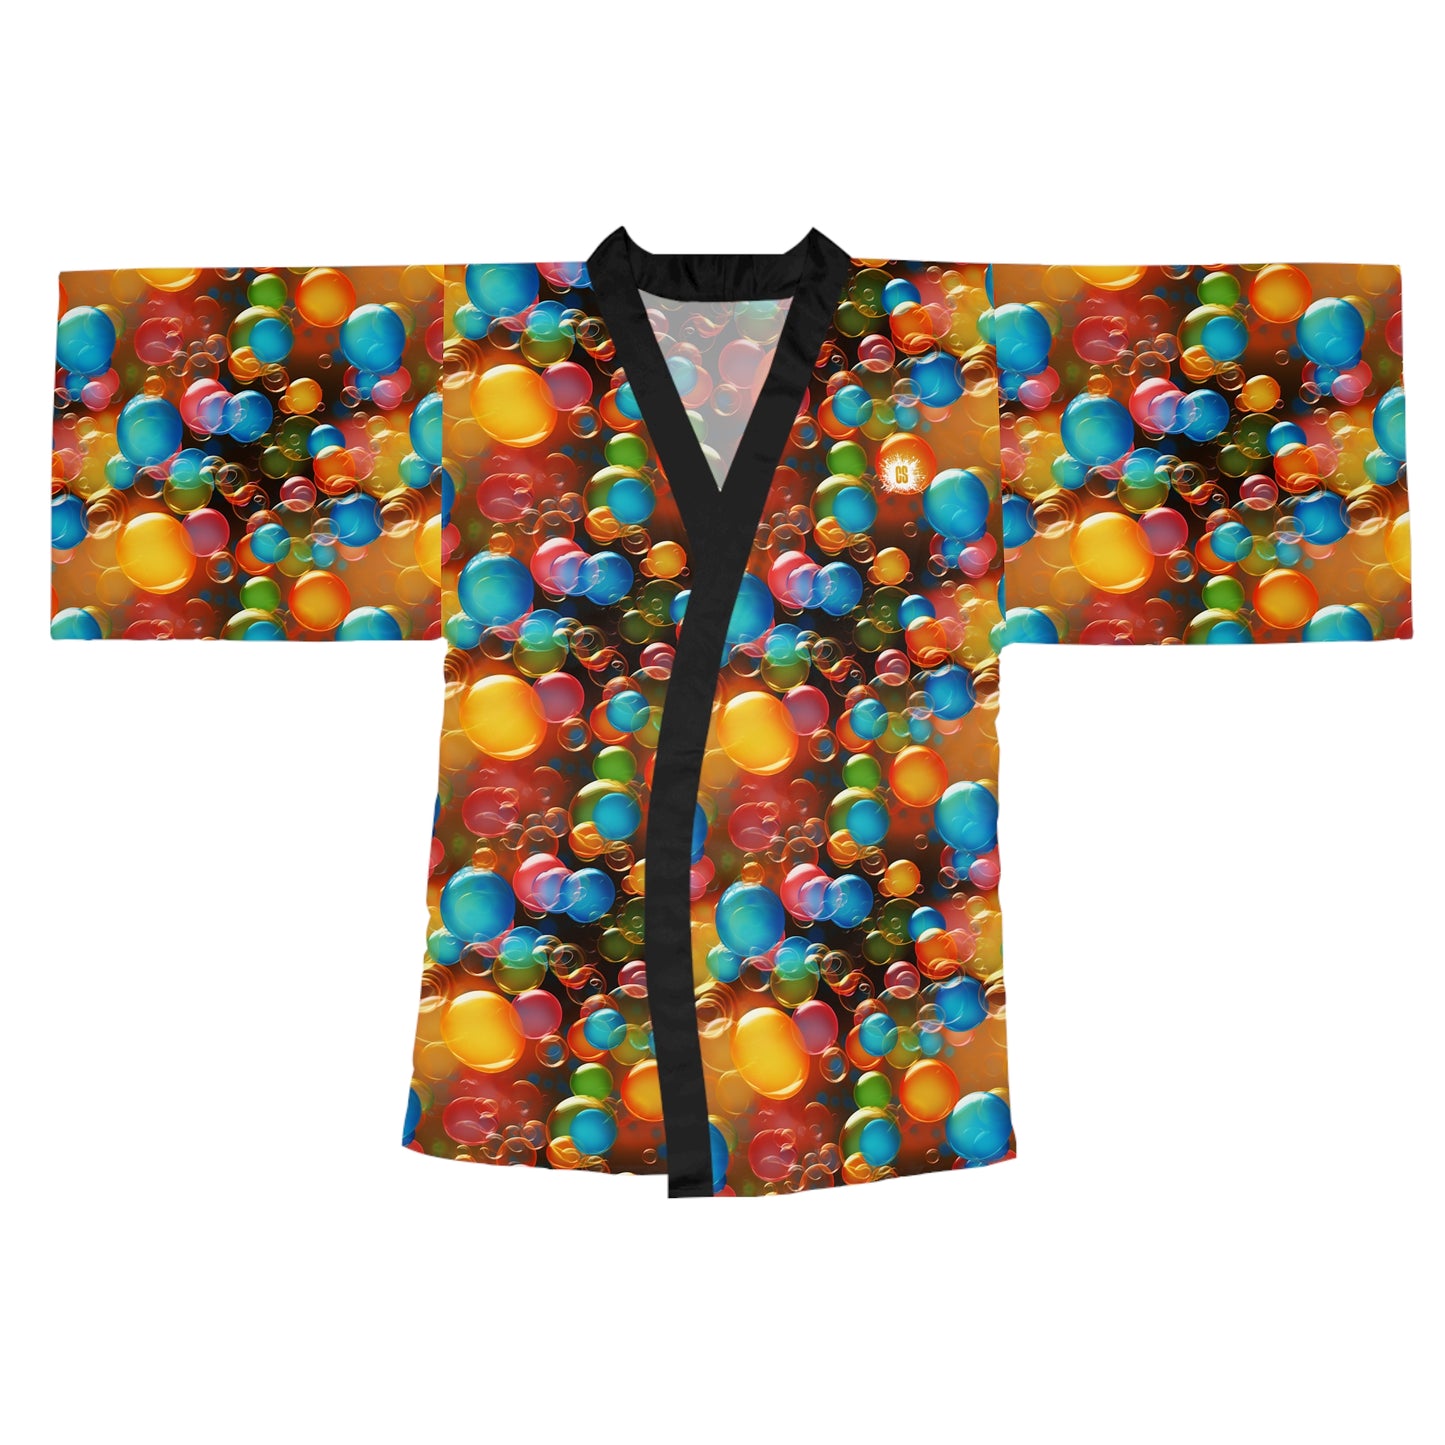 Satin Sheets Long Sleeve Kimono Robe